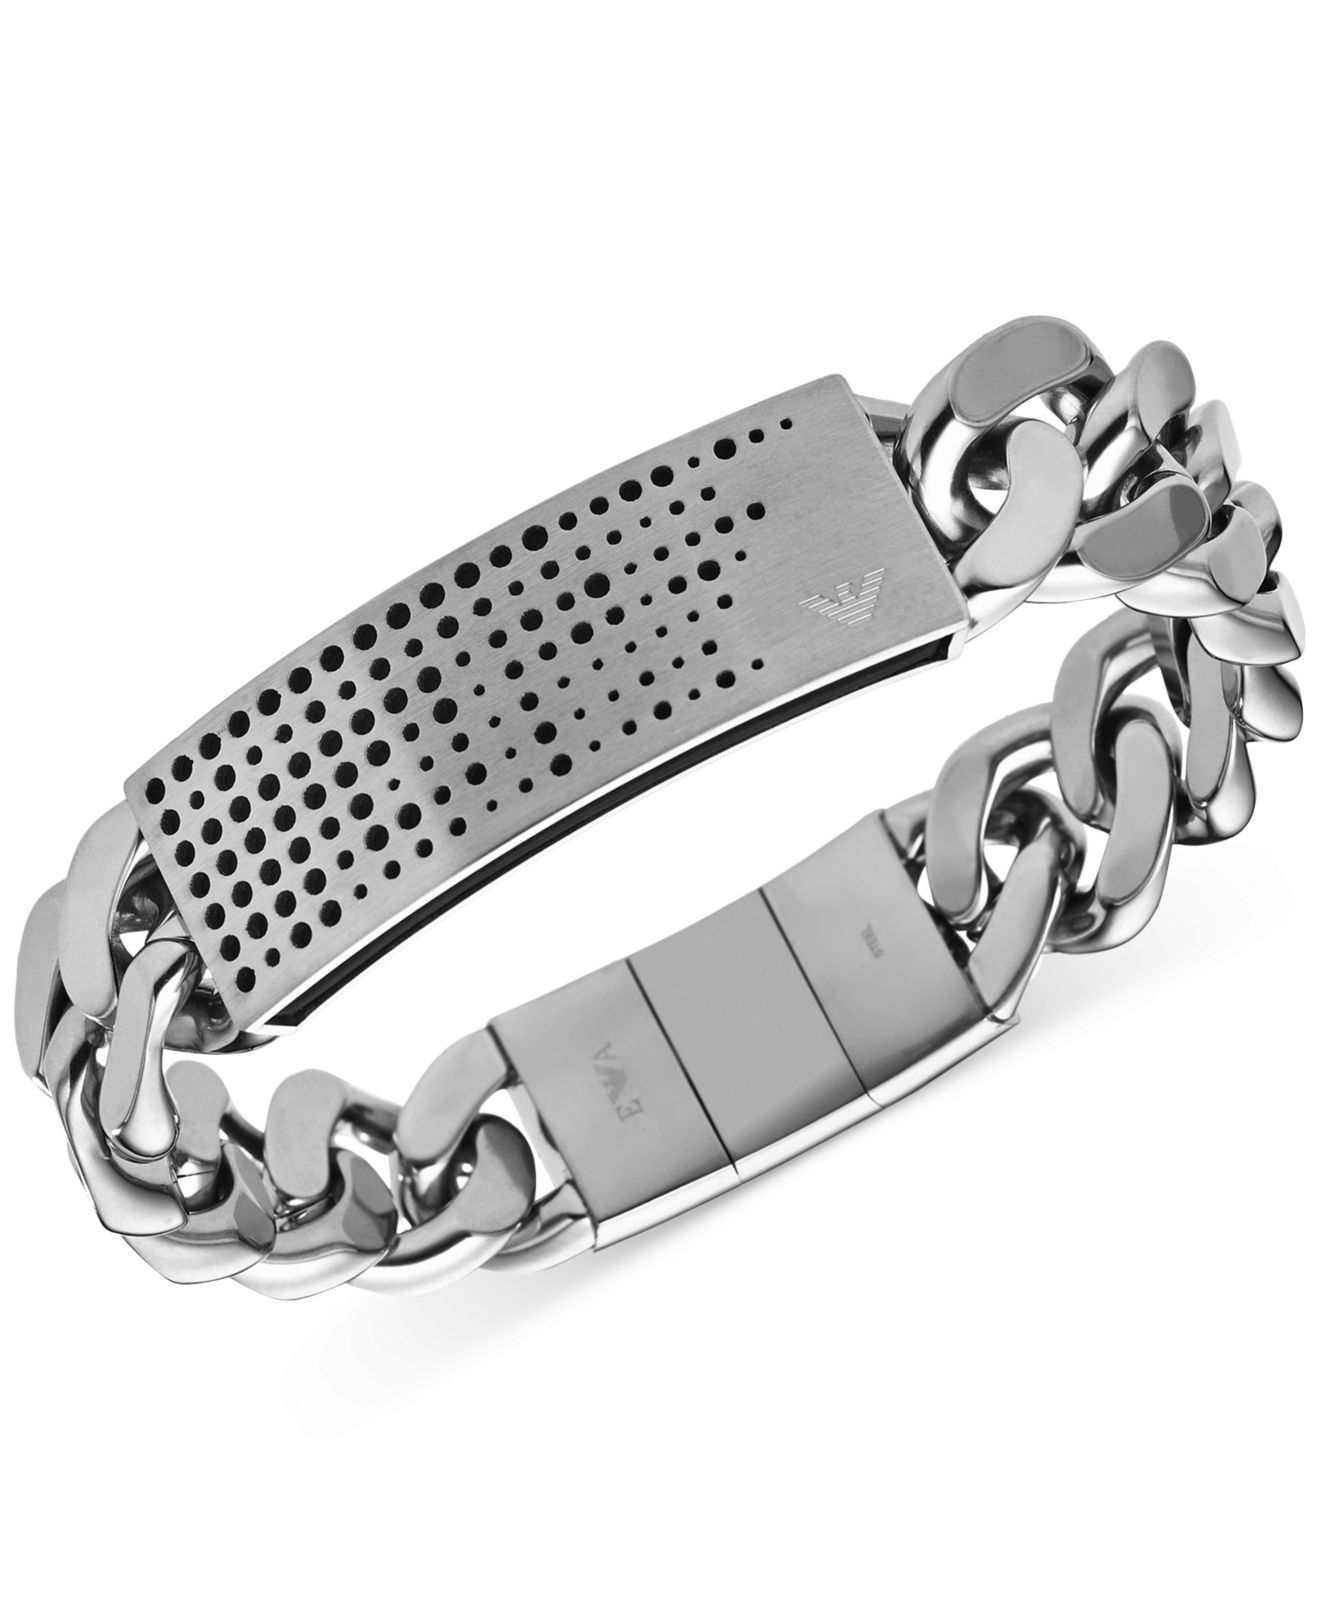 Emporio Armani Mens Silver Bracelet Egs2940040 : Amazon.in: Fashion